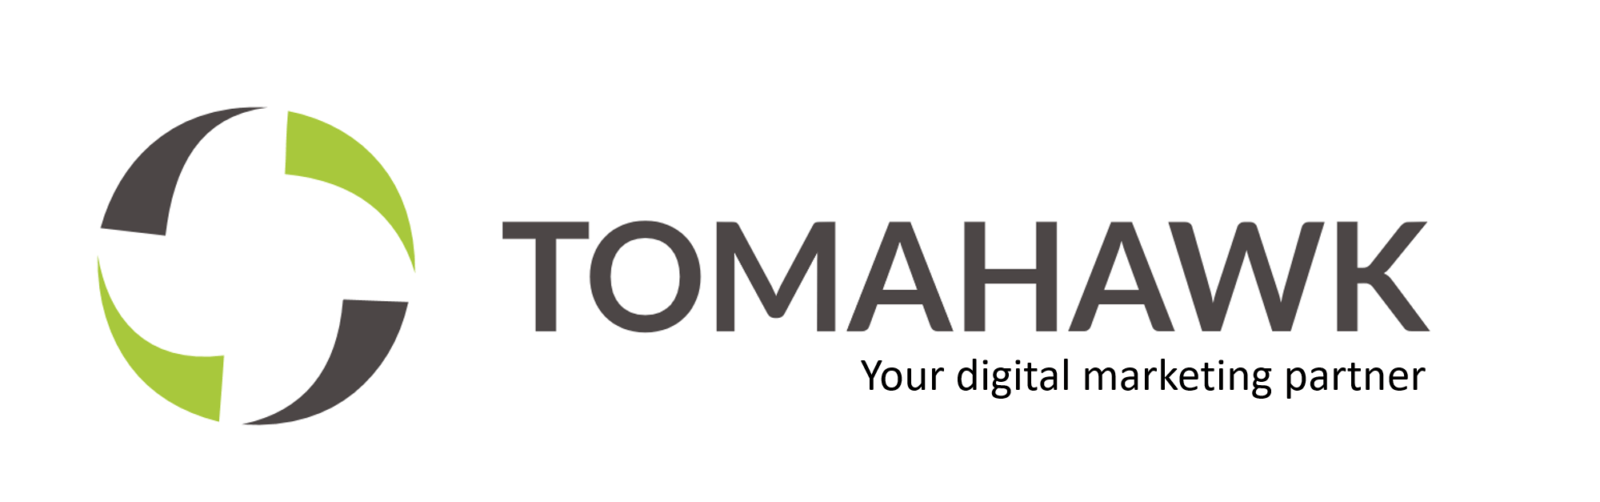 Tomahawk Logo - Tomahawk Logo